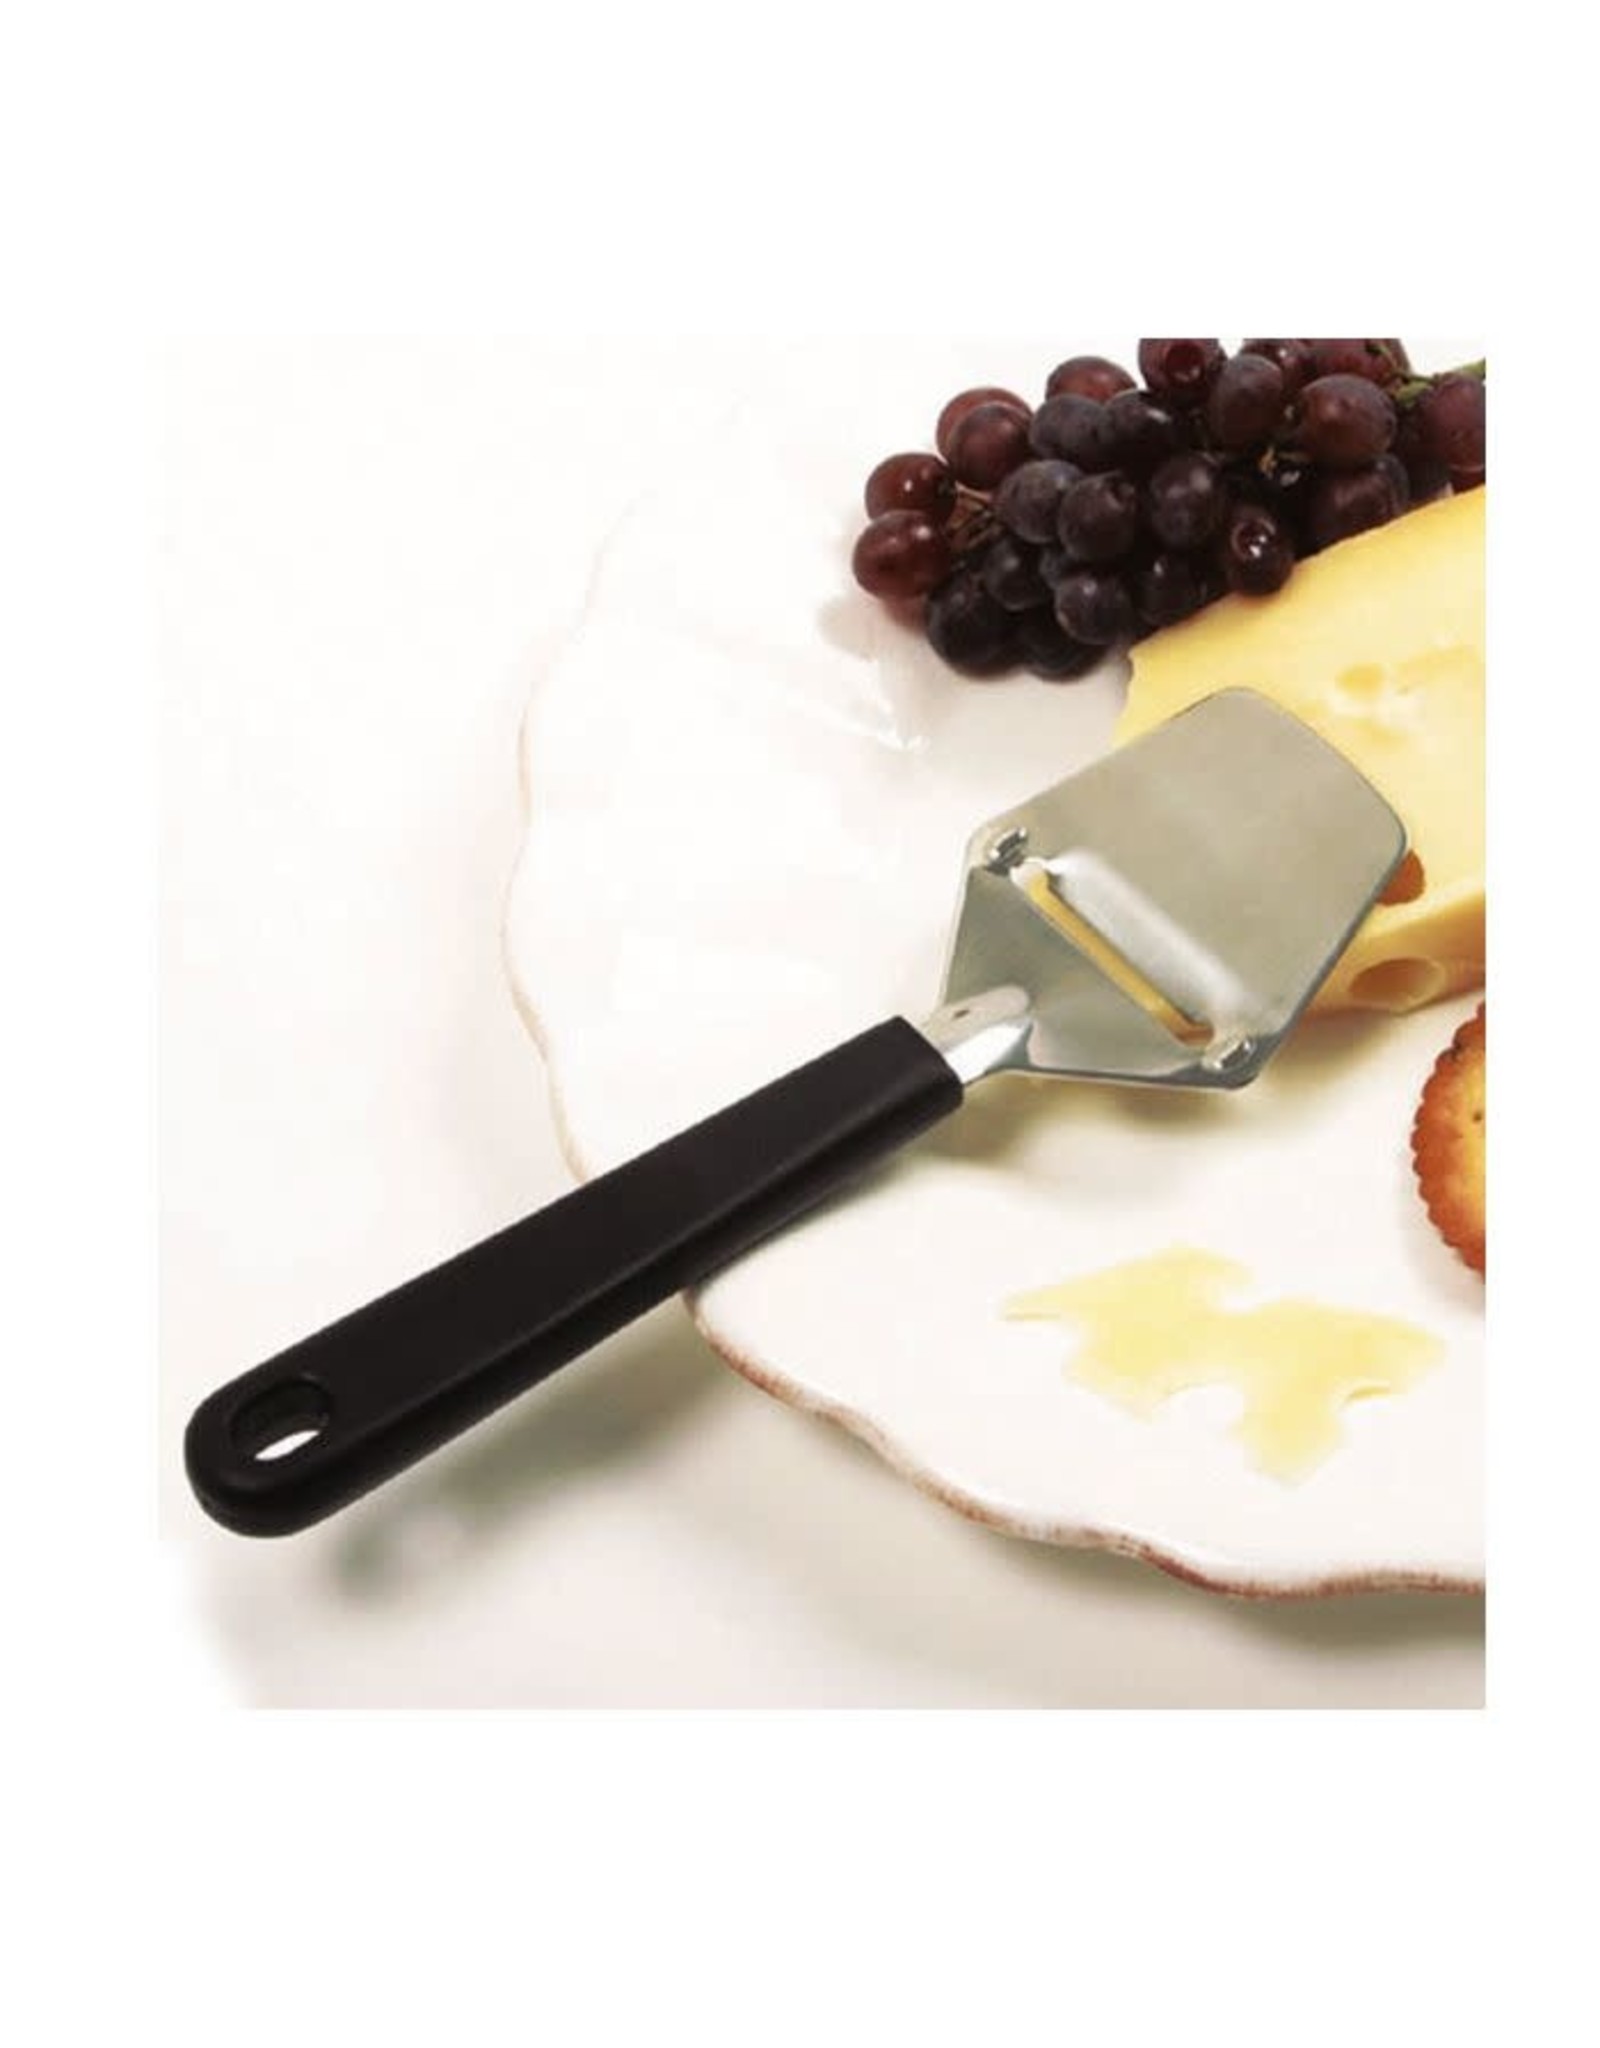 Mini cheese plane /slicer